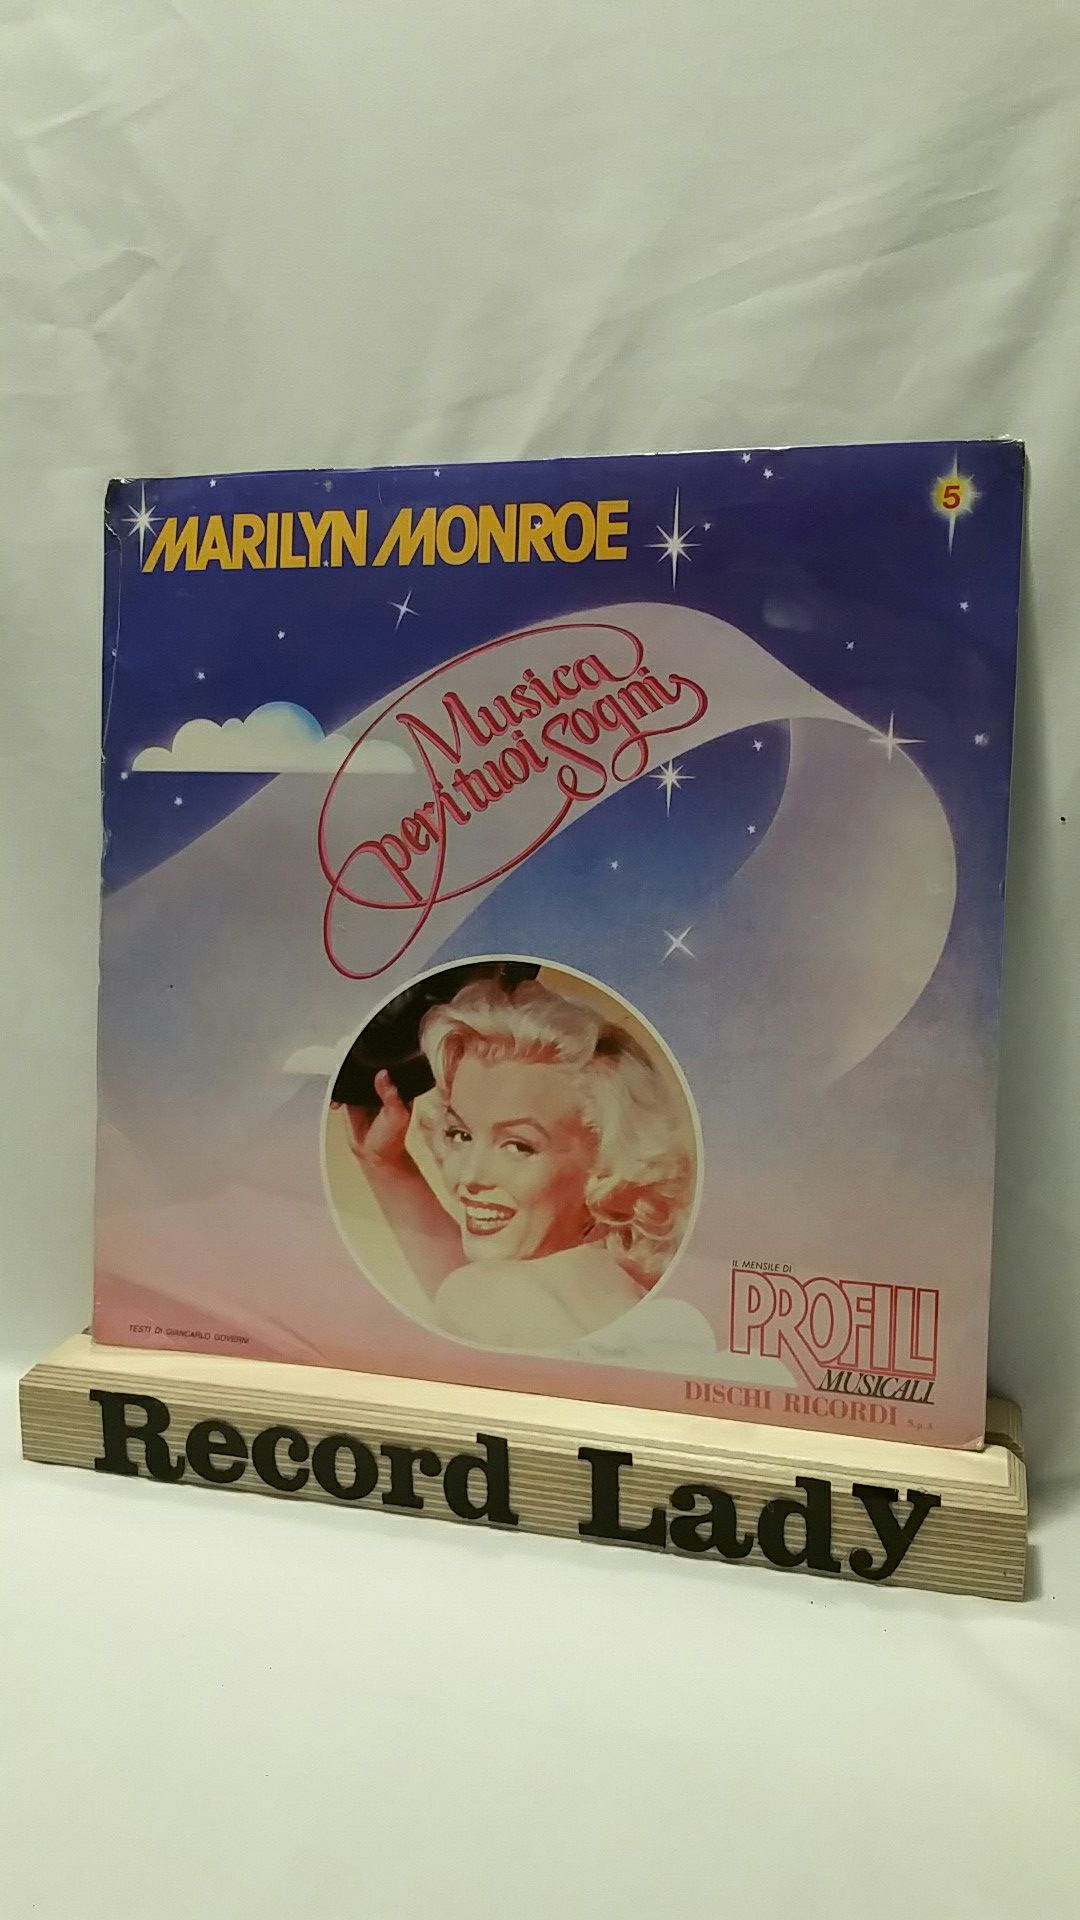 Marilyn Monroe Sealed French pressing vinyl record